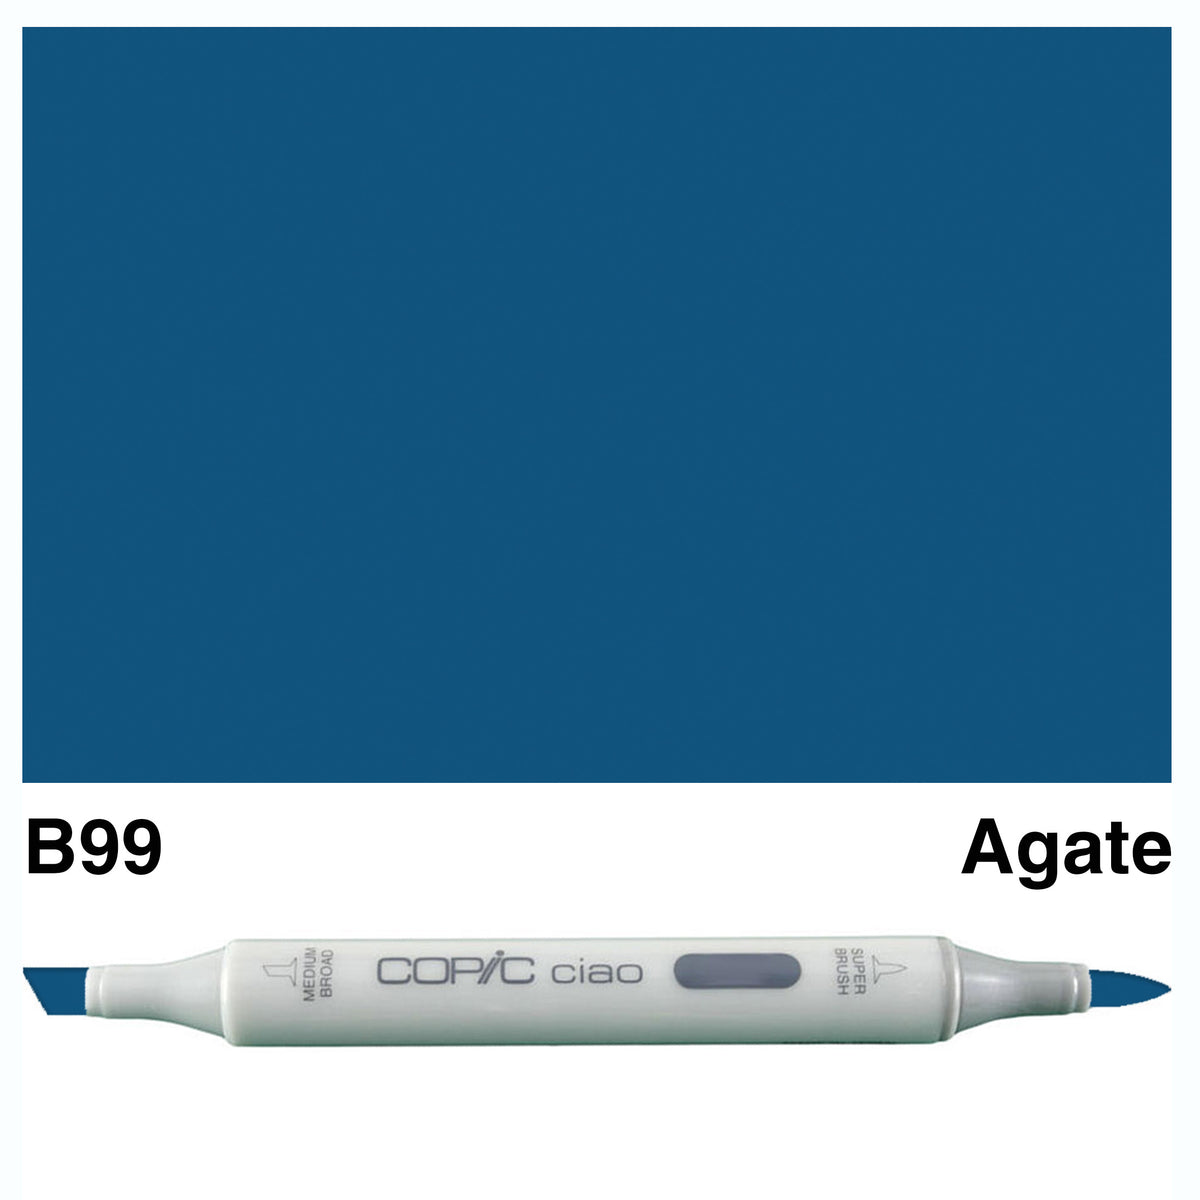 Copic Ciao B99-Agate